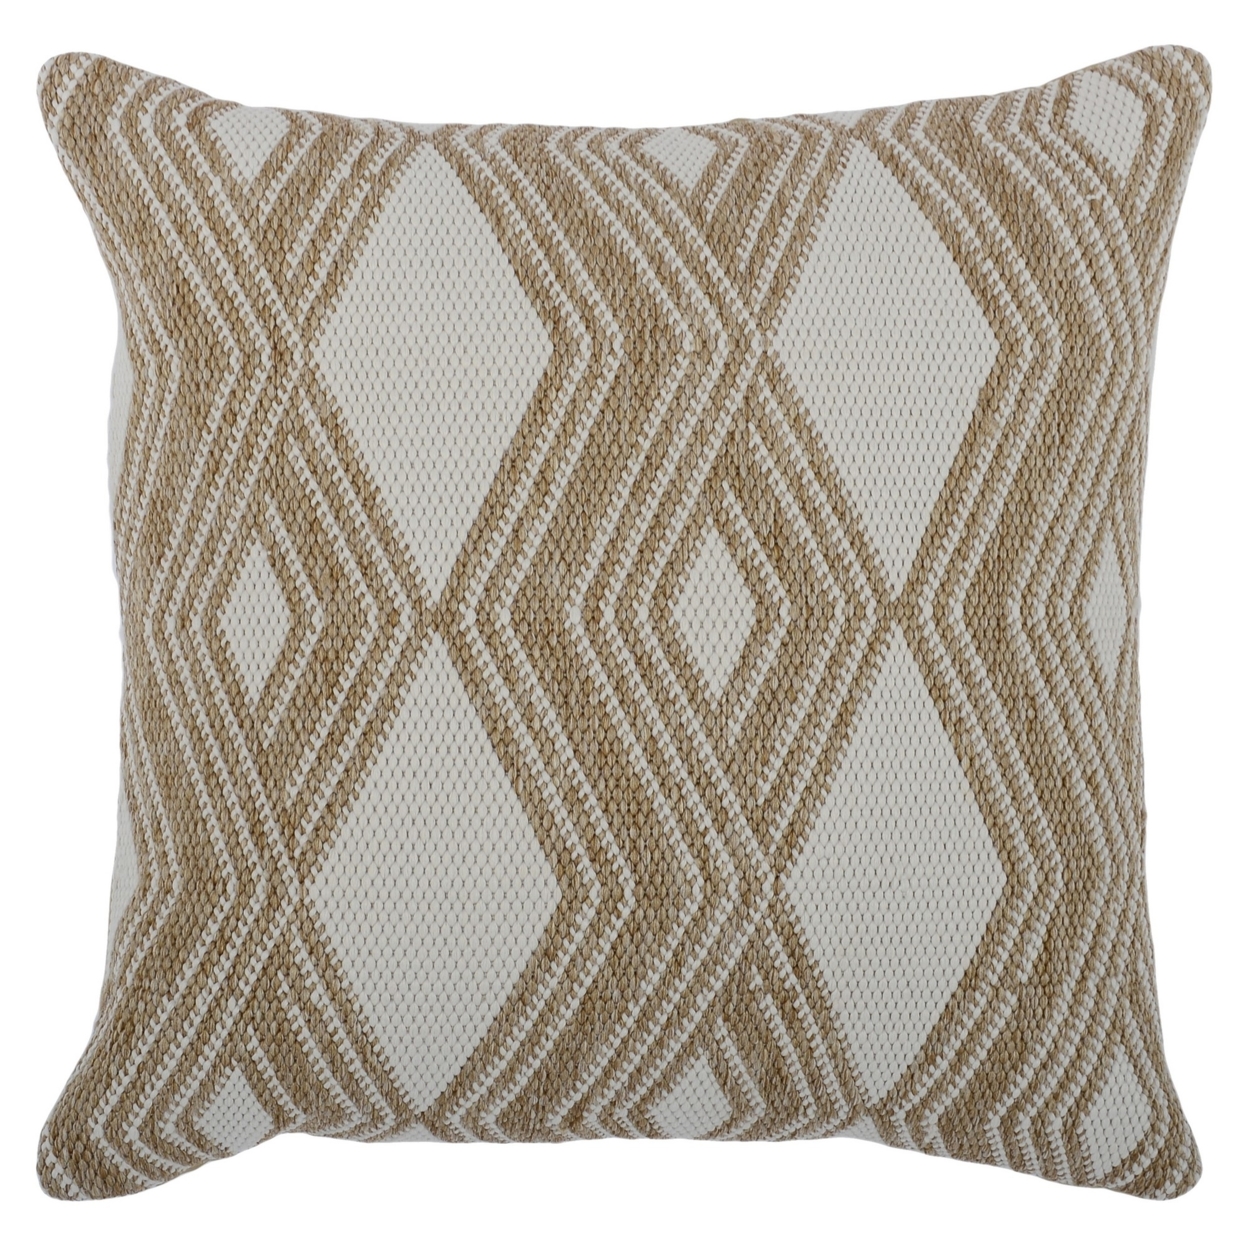 Jai 22 X 22 Outdoor Accent Throw Pillow, Handwoven Geometric Design, Brown- Saltoro Sherpi